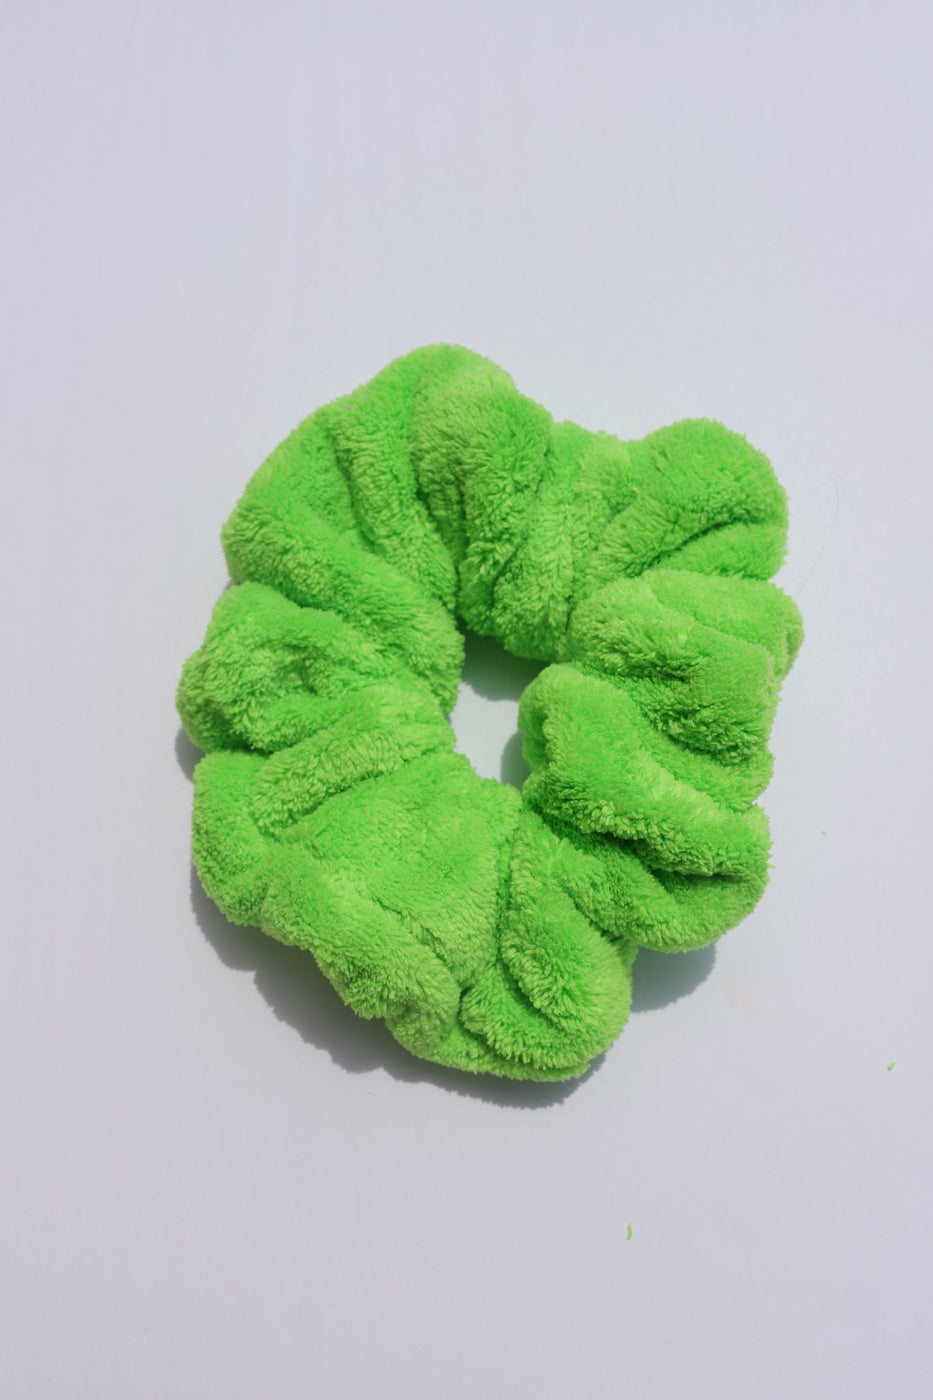 a green hair scrunchie on a white surface